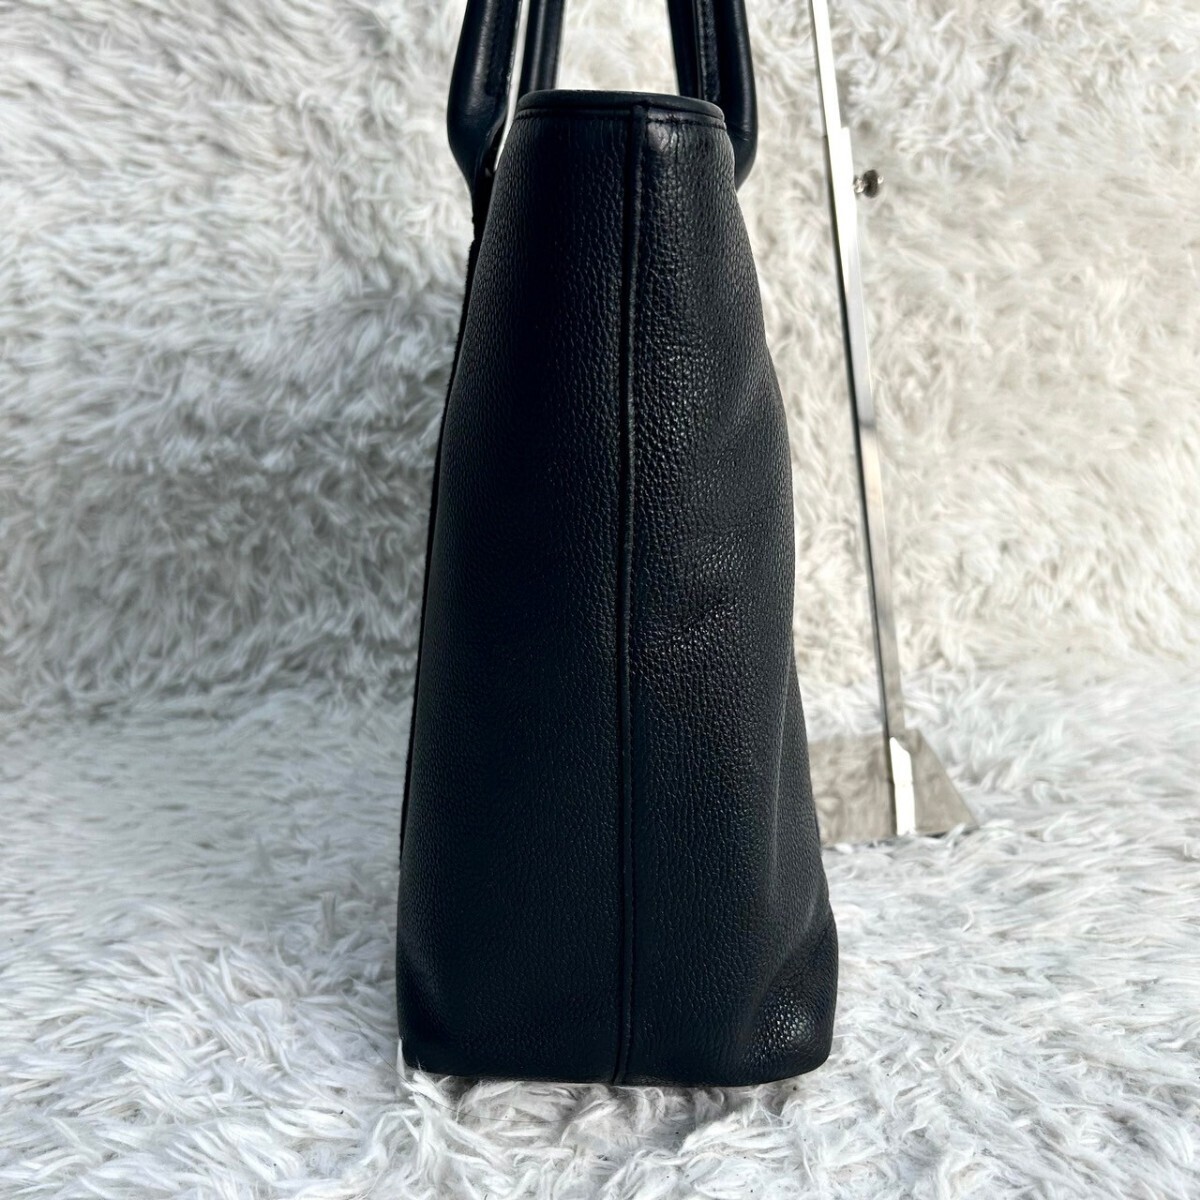  present goods * ultimate beautiful goods *A4* Paul Smith Paul Smith tote bag multi stripe briefcase business men's leather original leather black black 